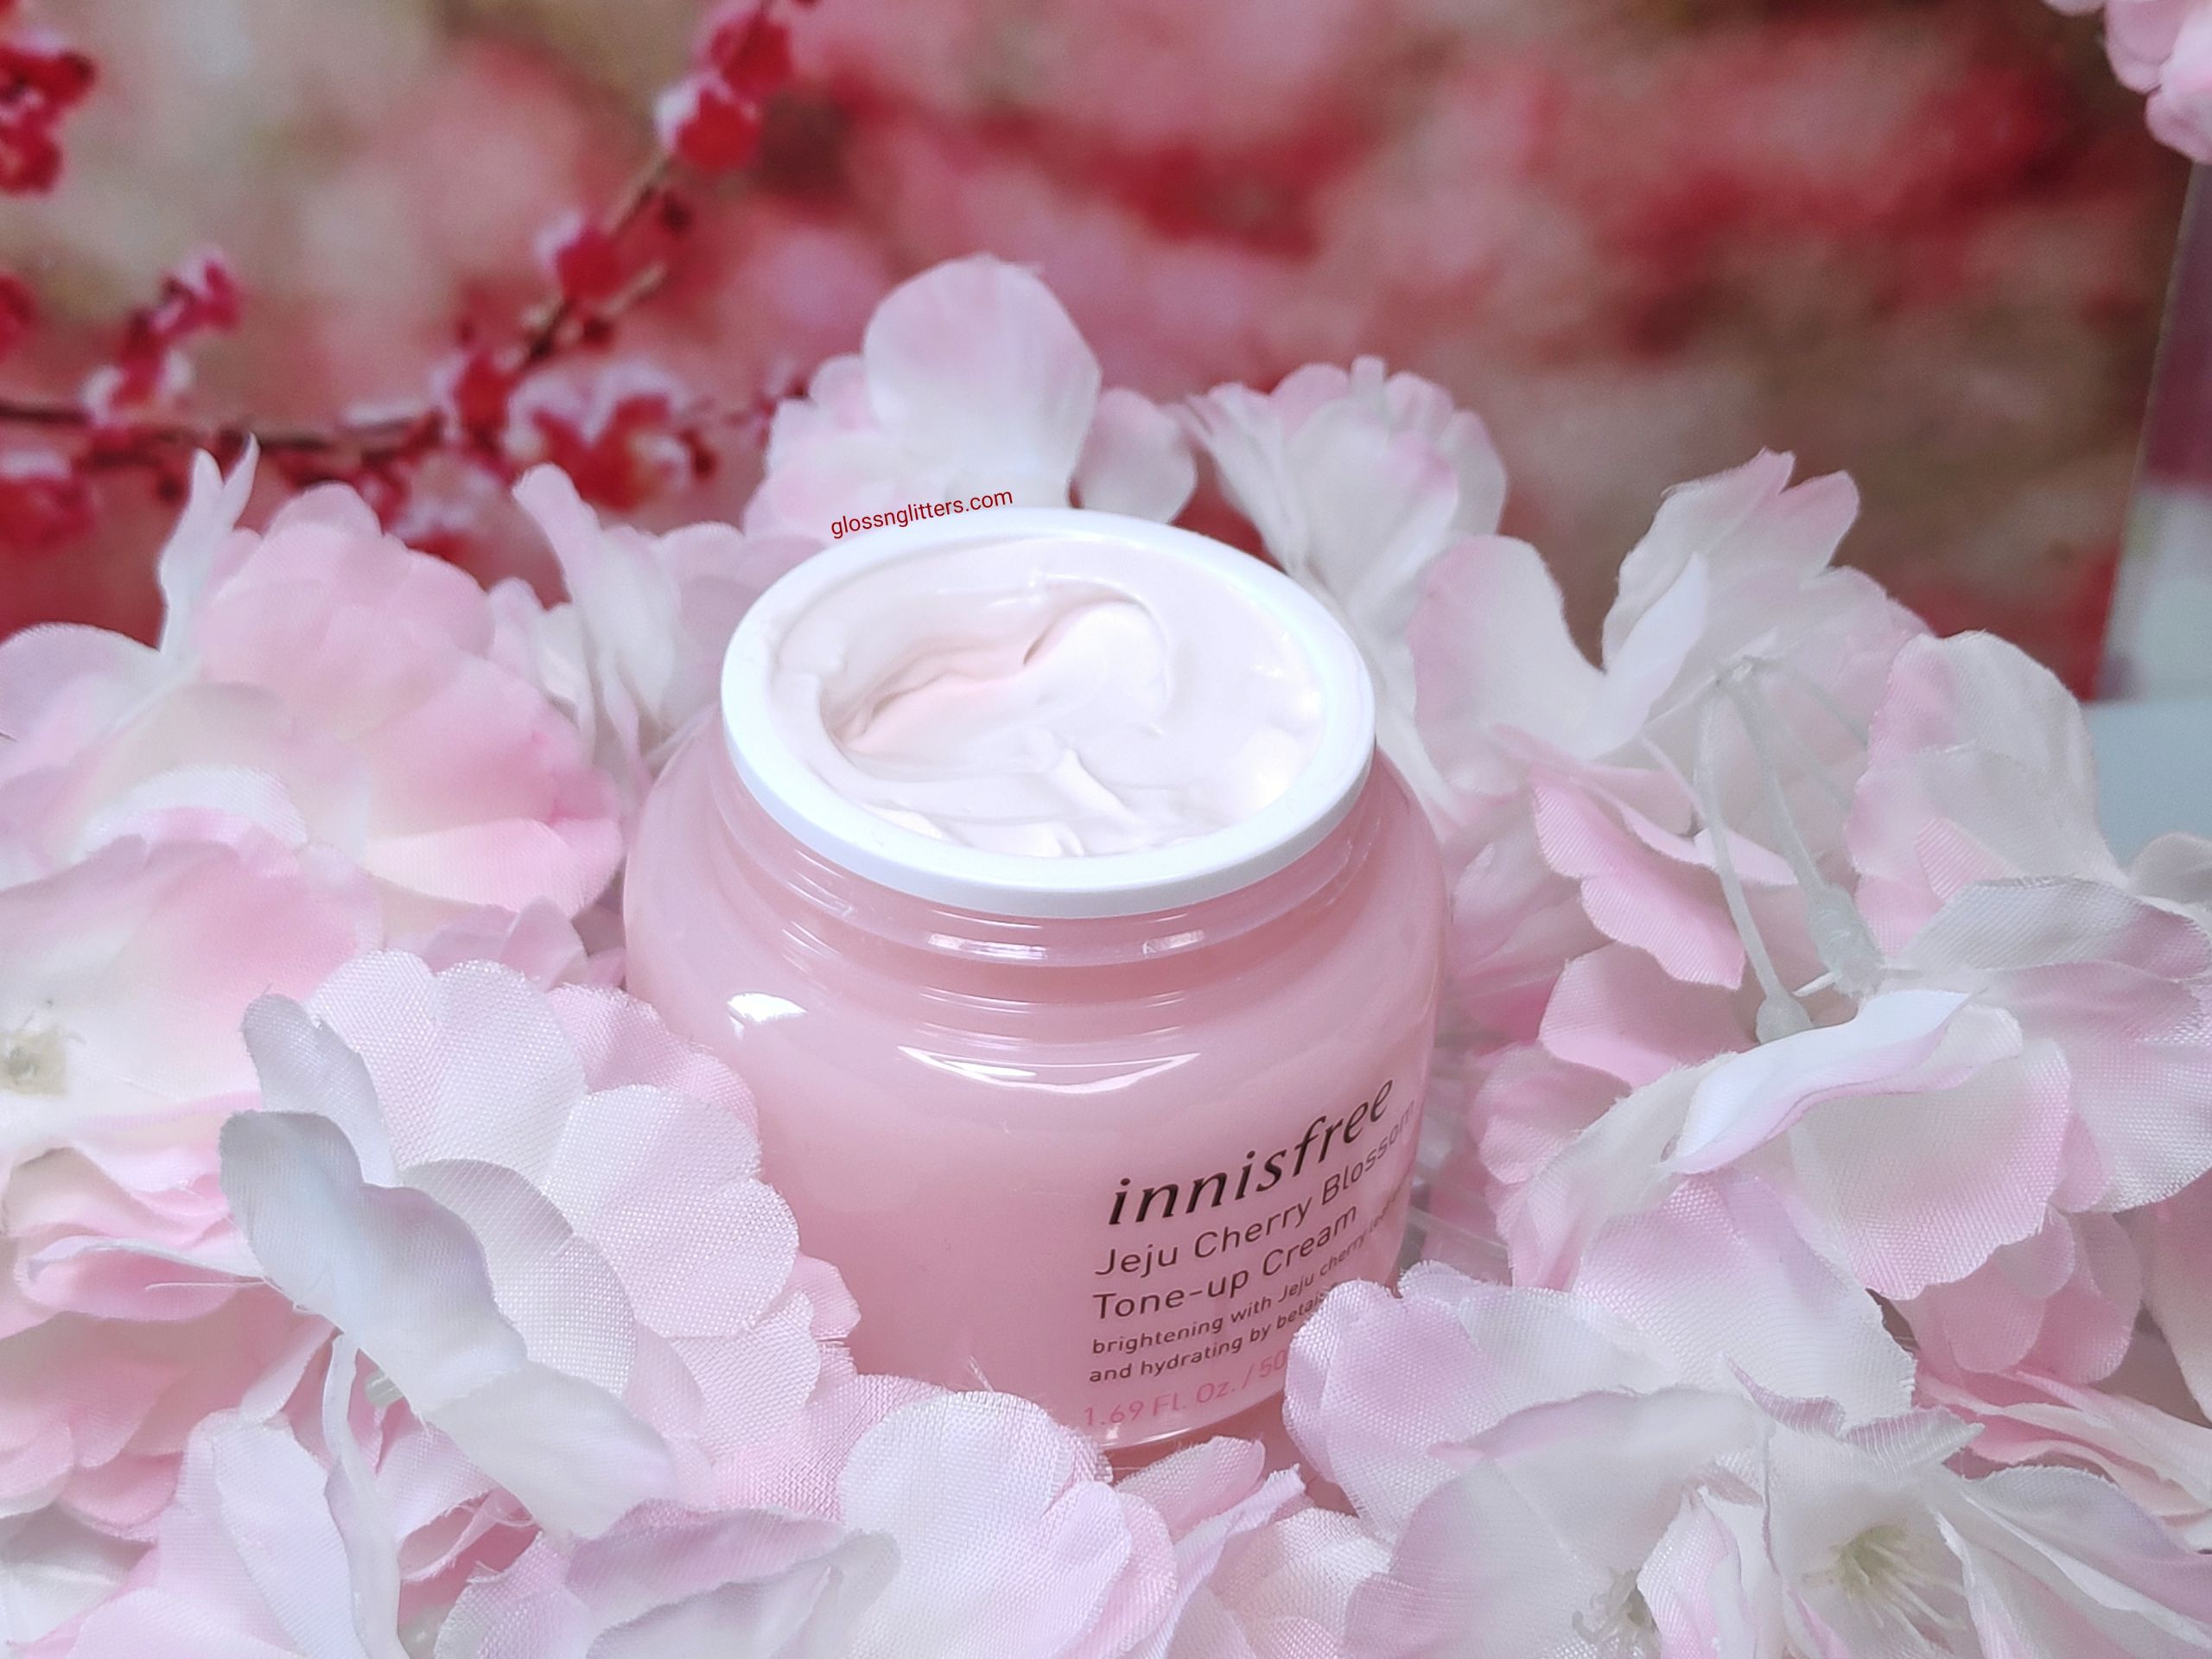 Innisfree Jeju cherry blossom tone up cream review - Glossnglitters